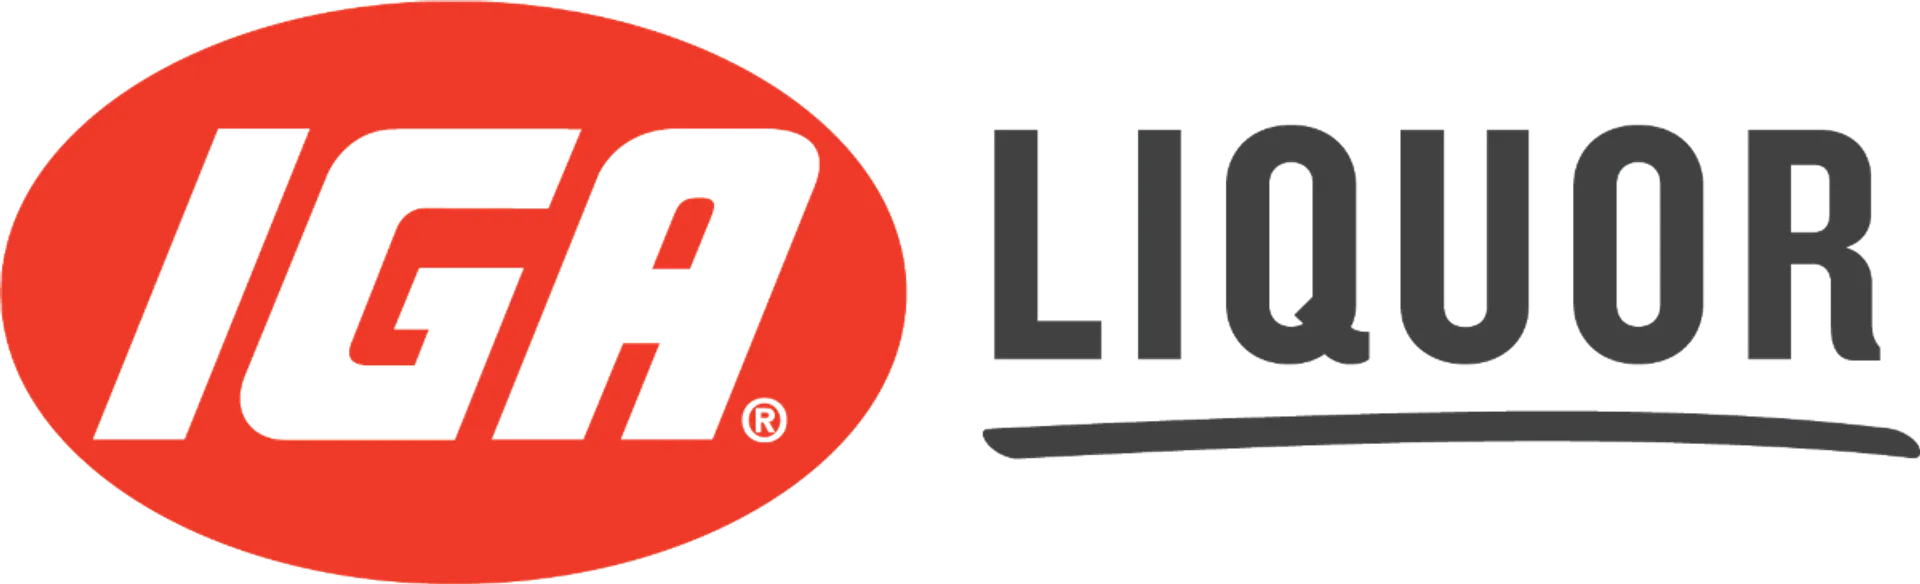 IGA LIQUOR logo of current catalogue